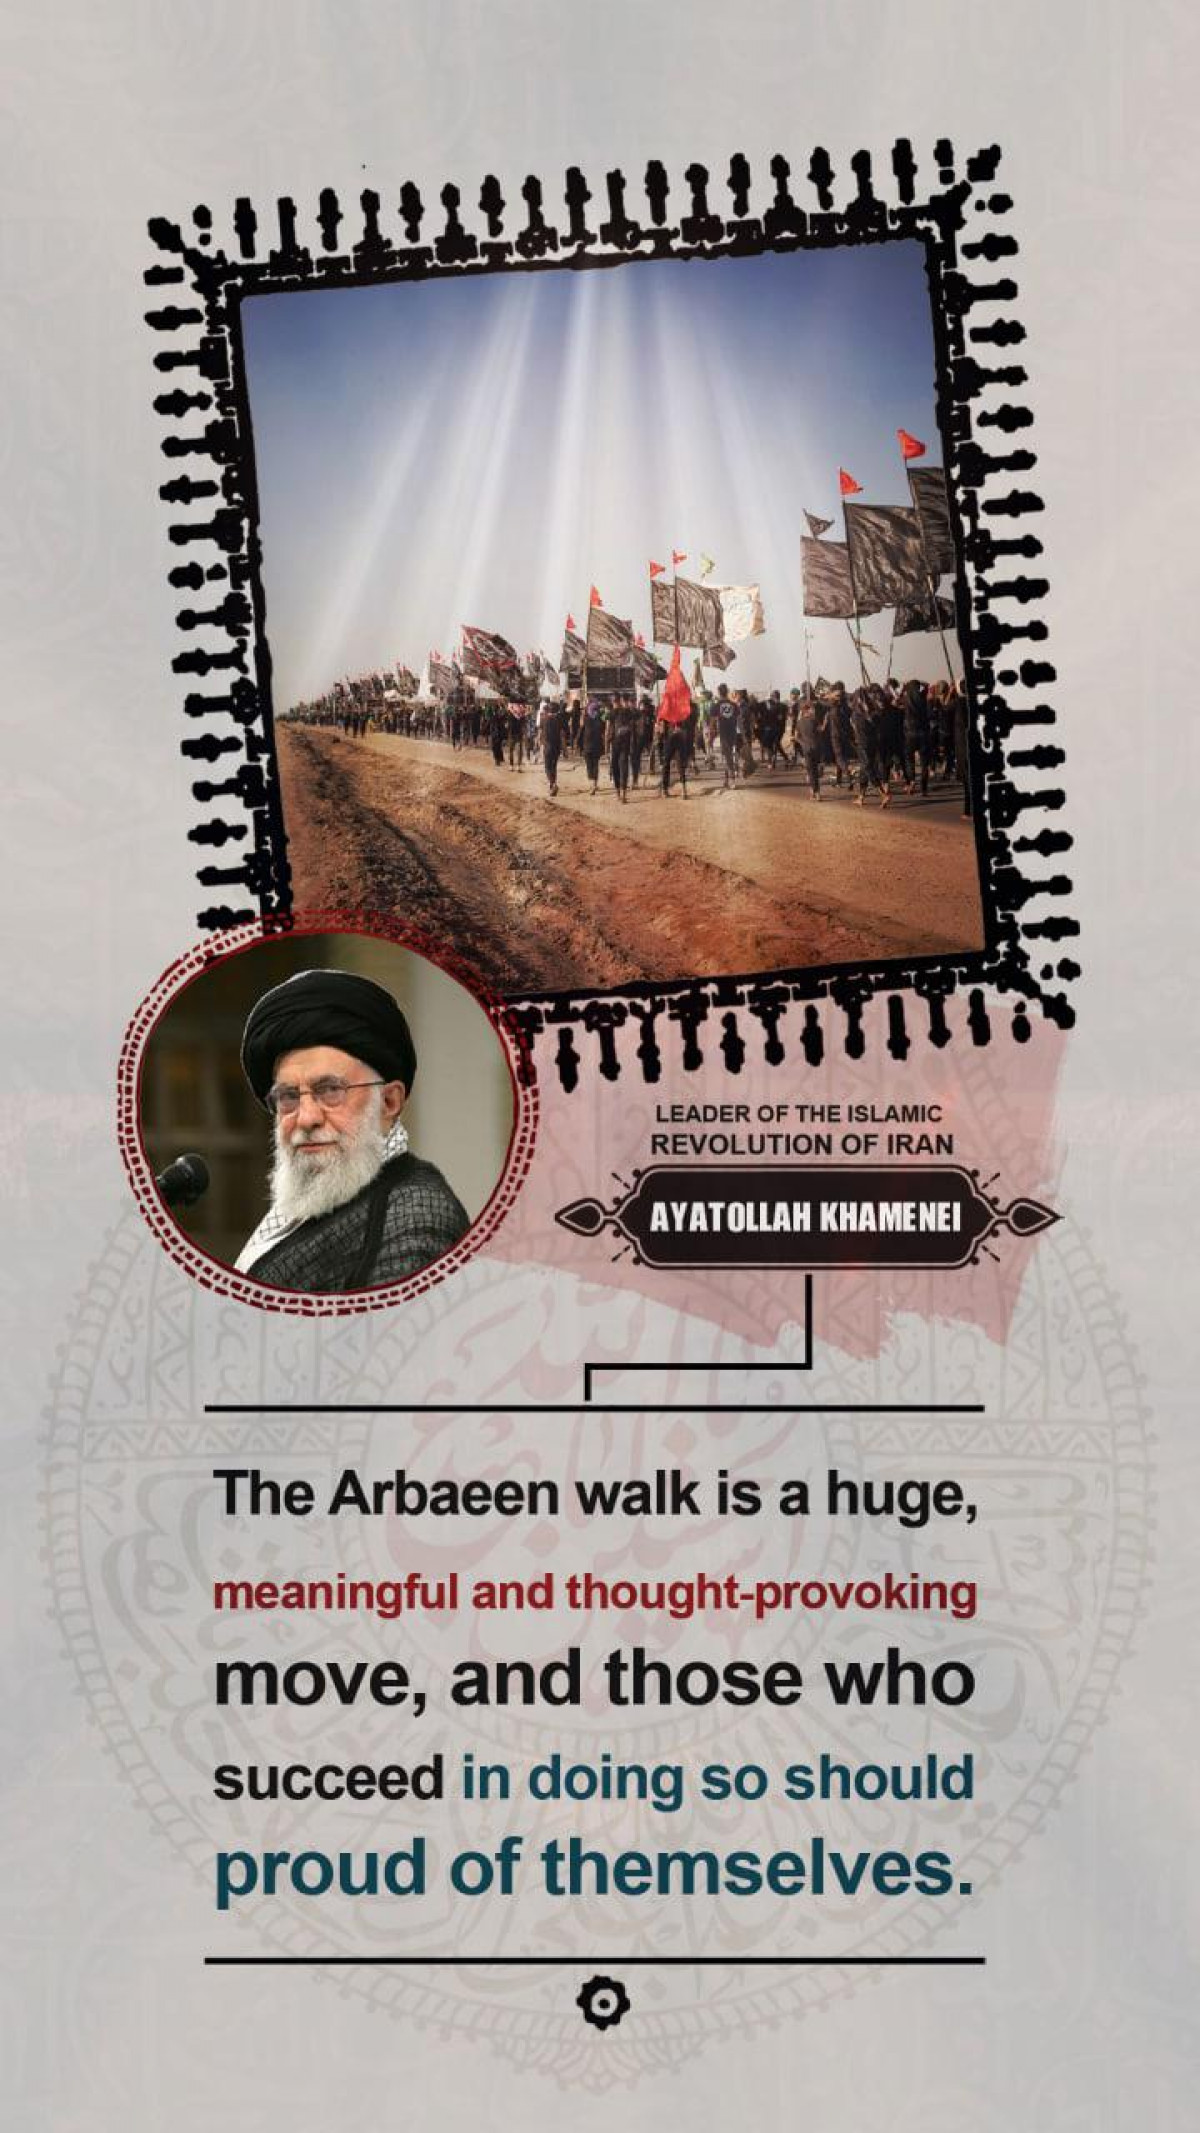 The Arbaeen walk is a huge